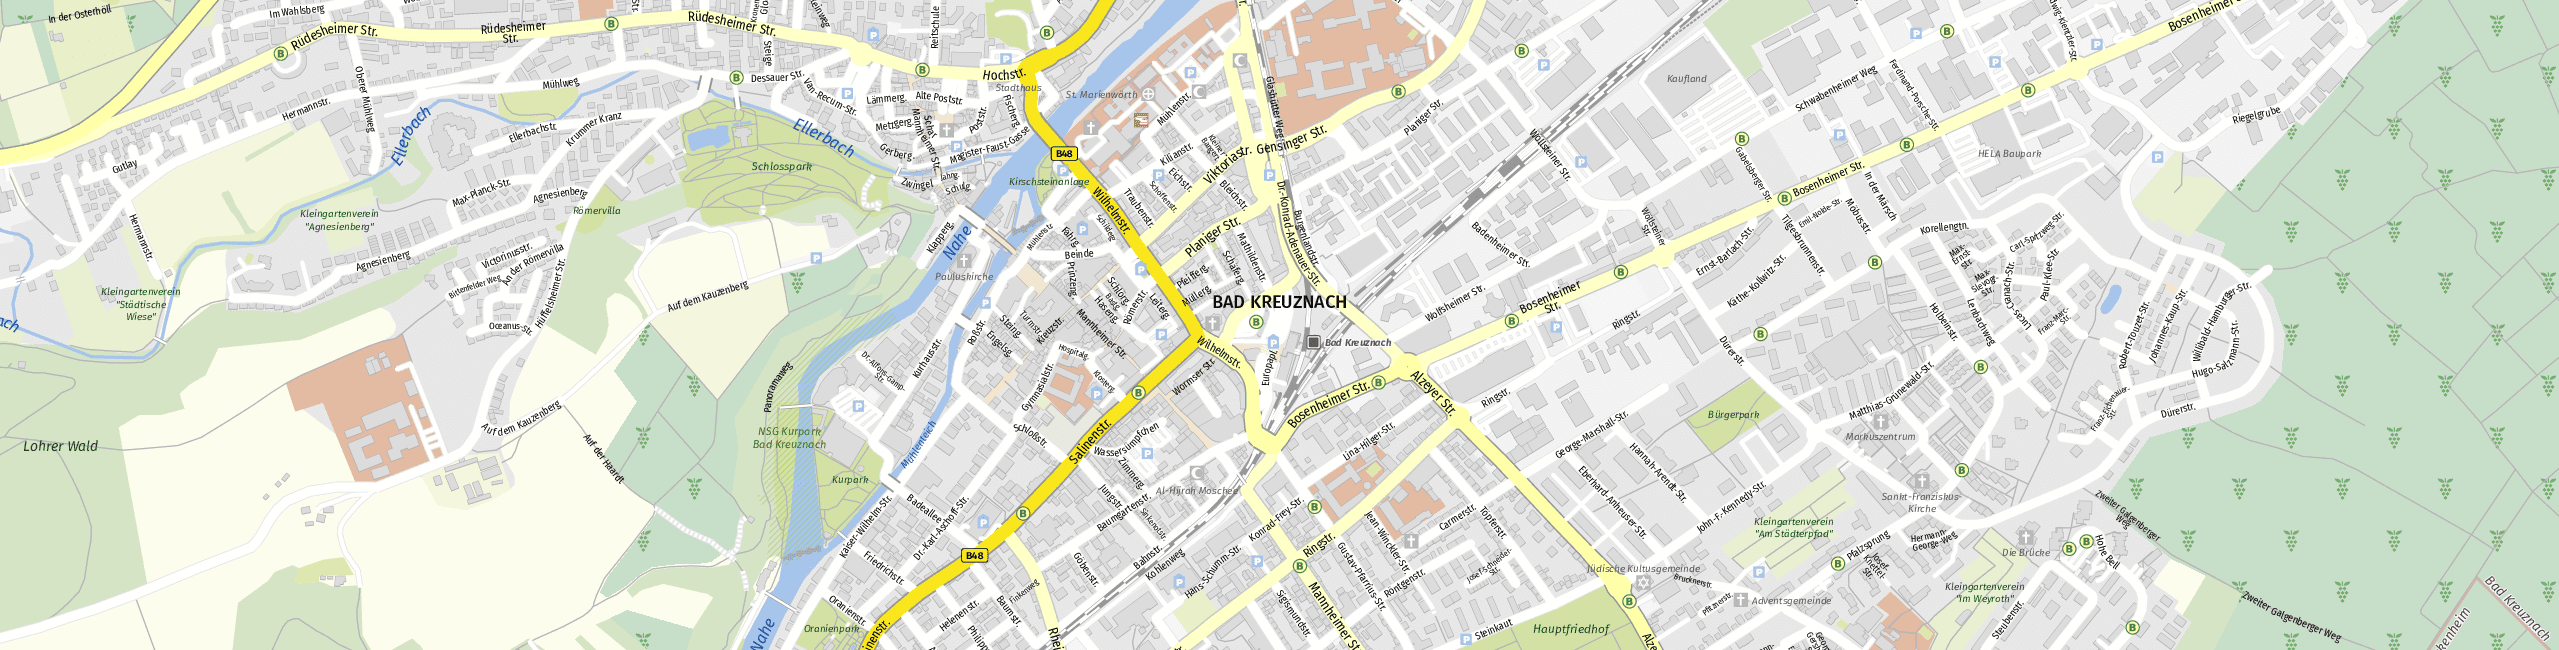 Stadtplan Bad Kreuznach zum Downloaden.